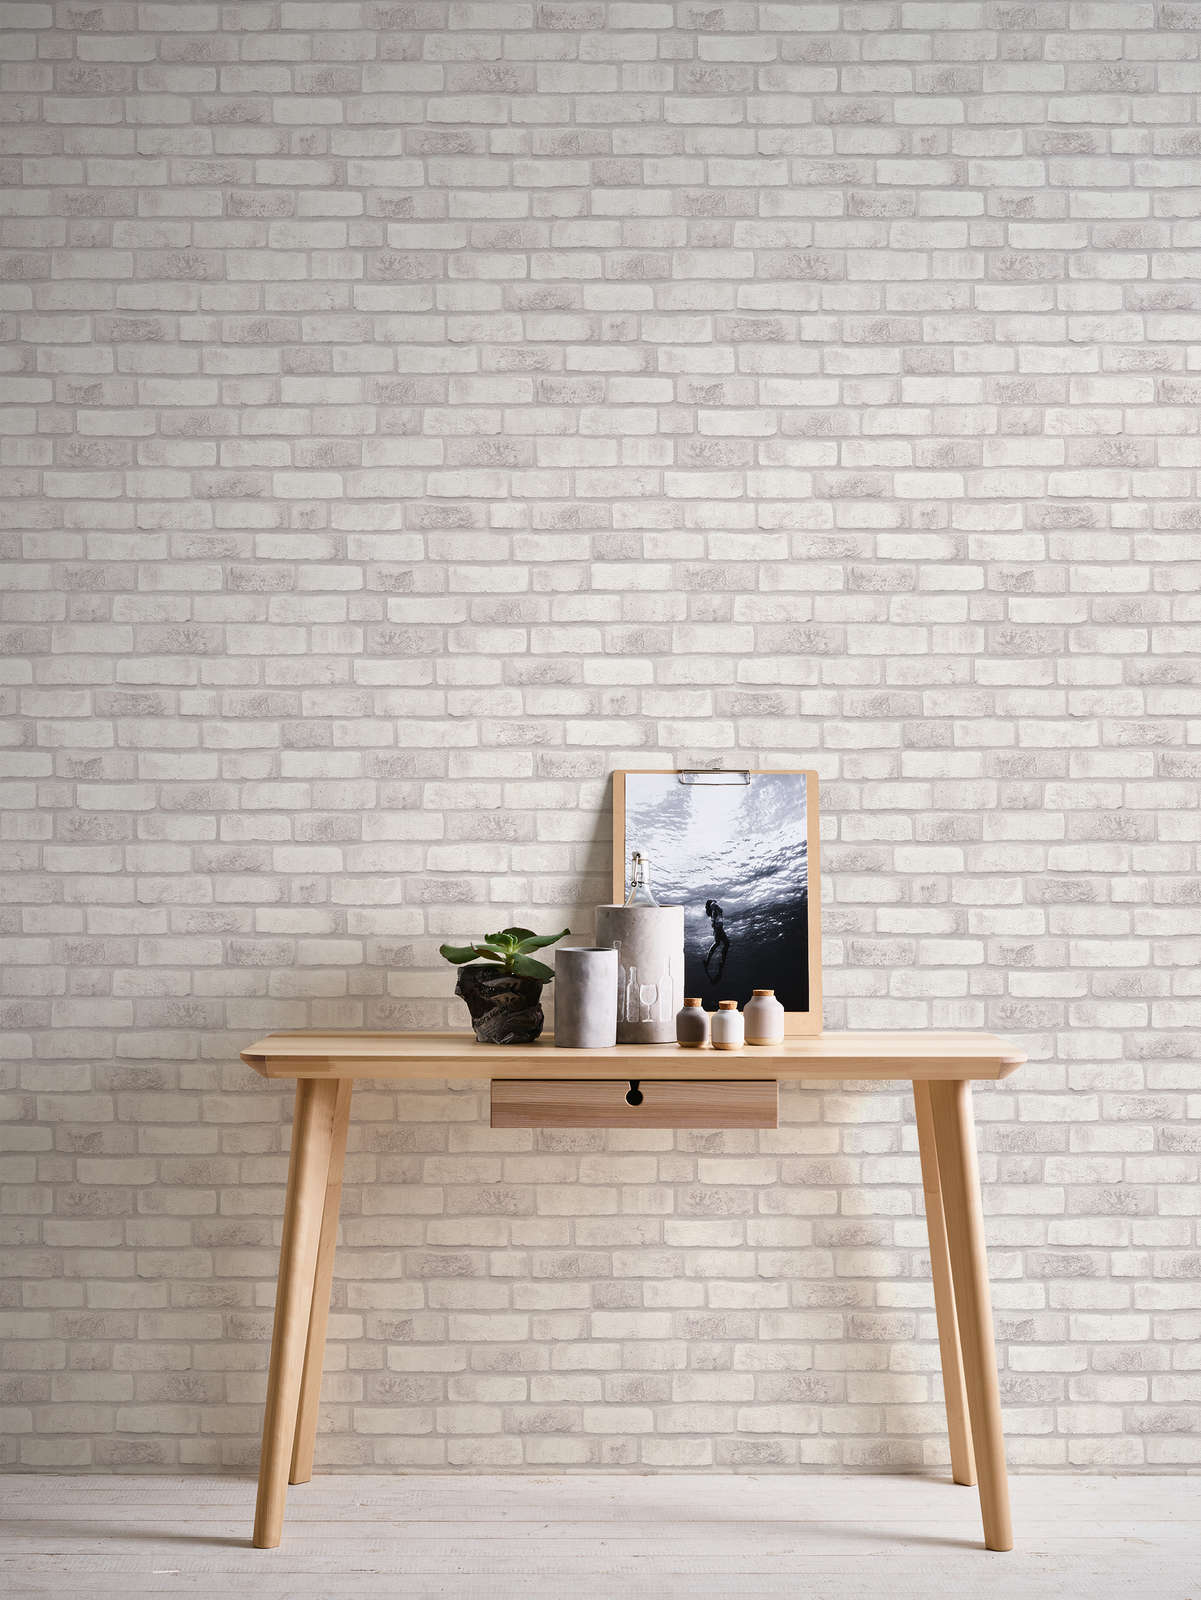             Non-woven wallpaper with brick wall - white, grey, grey
        